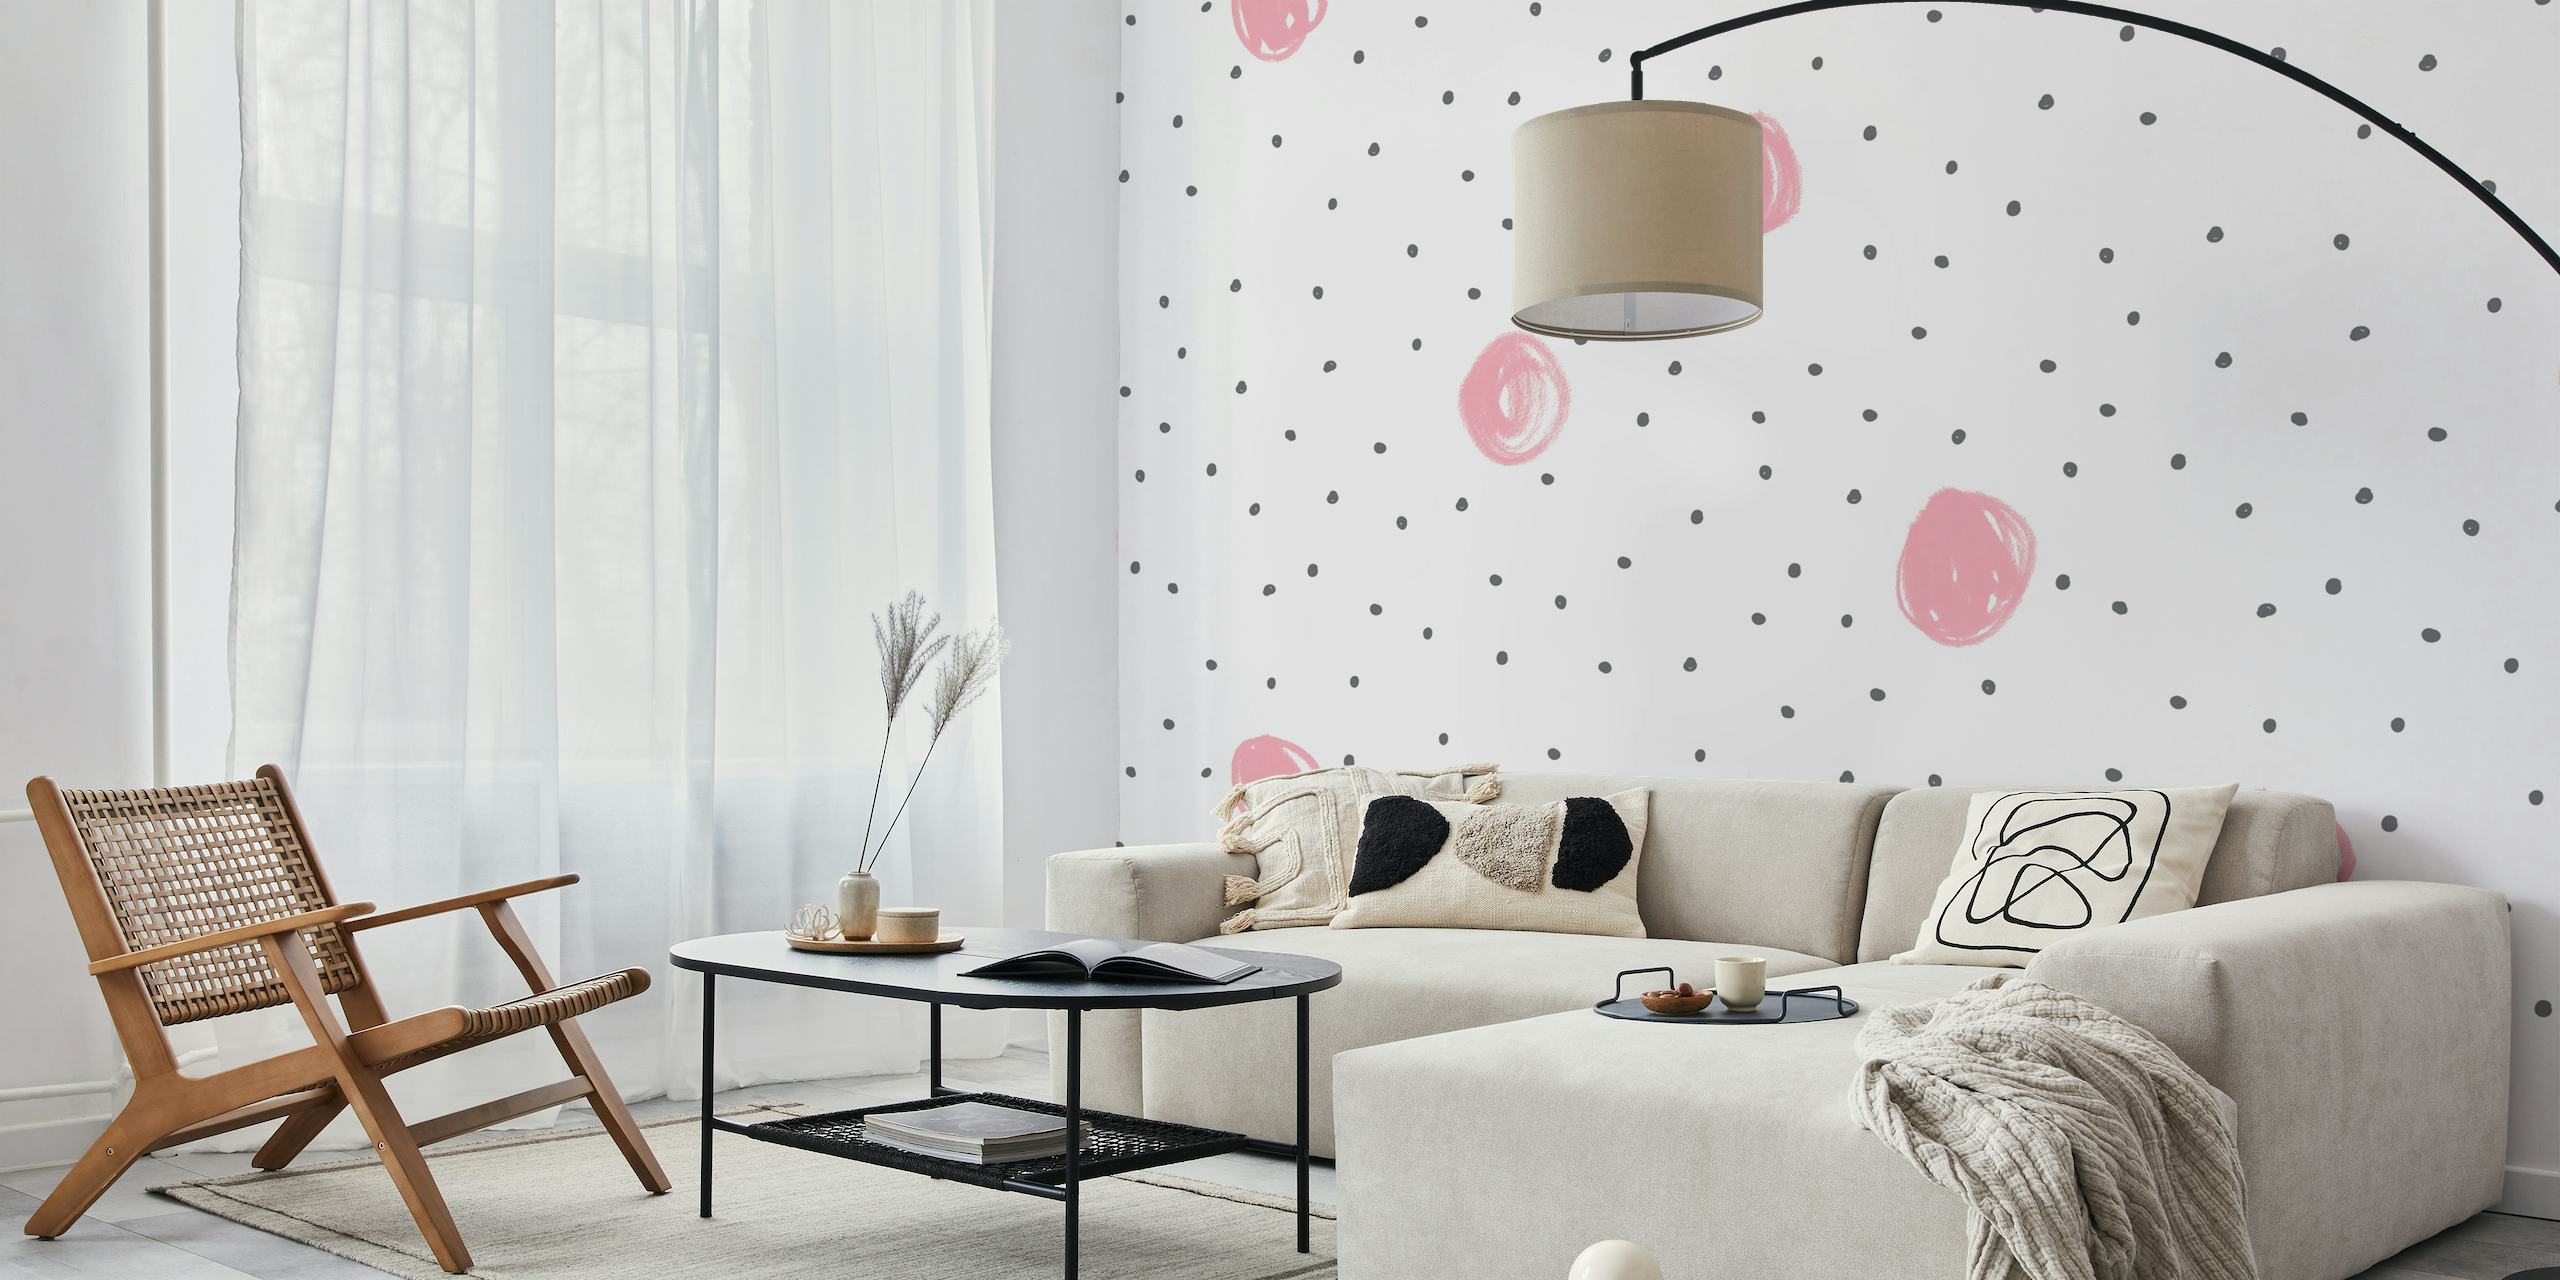 Lovely dots wallpaper